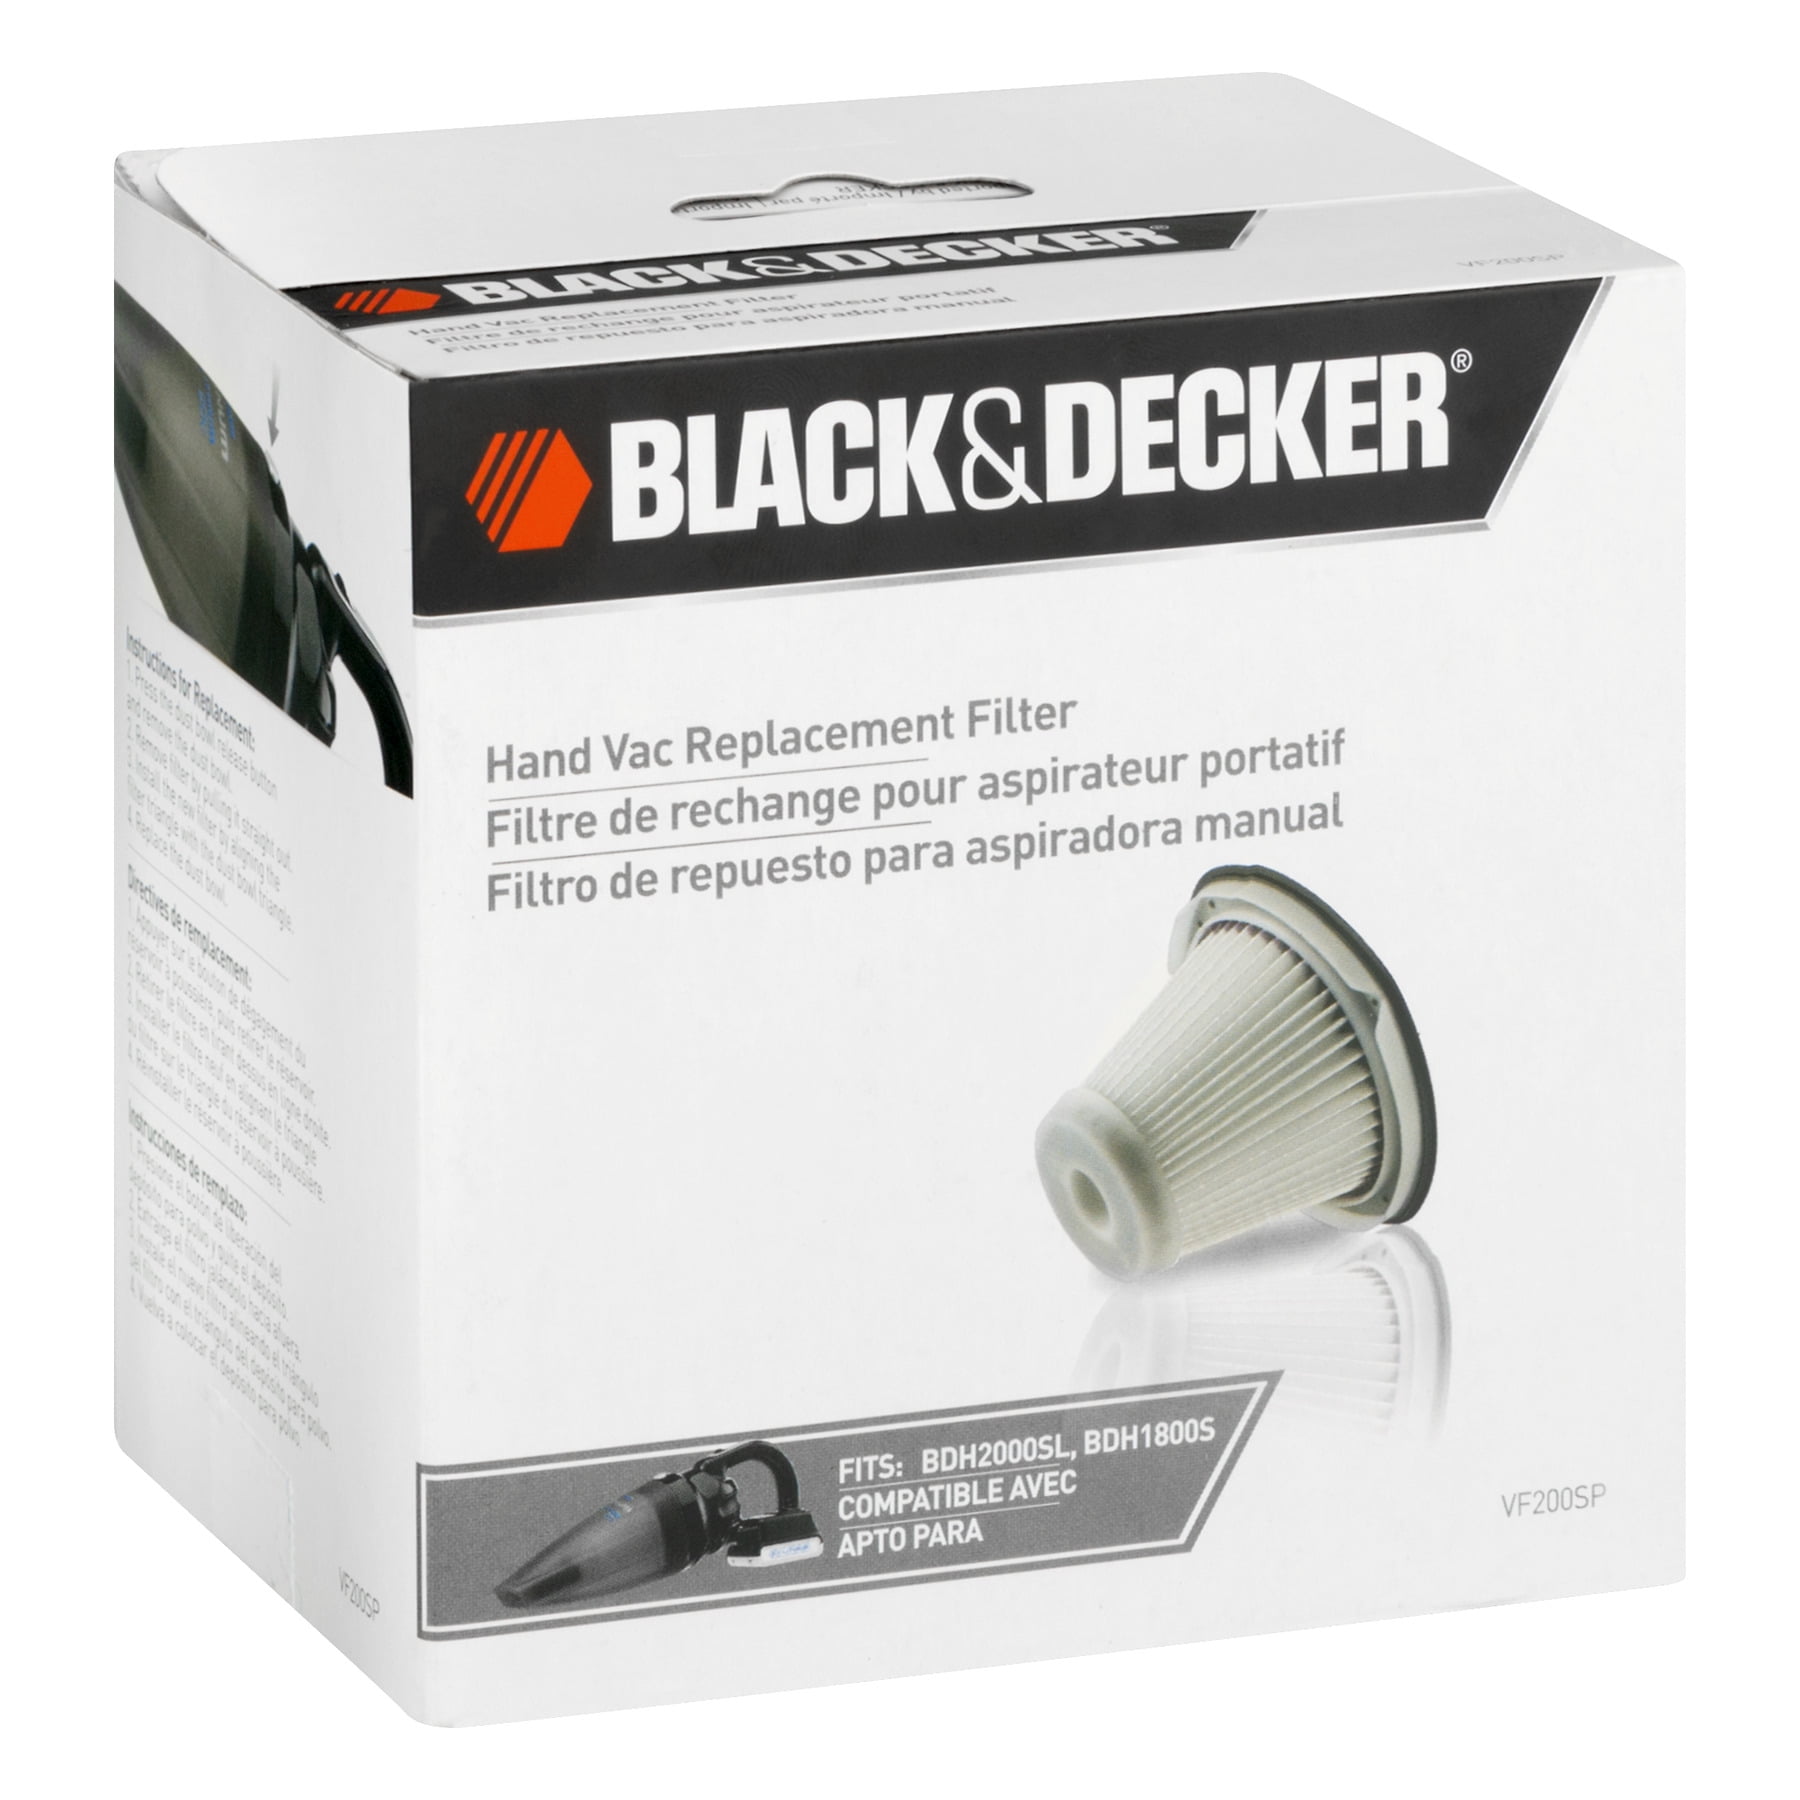 BLACK+DECKER Hand Vac Replacement Filter, VF200SP